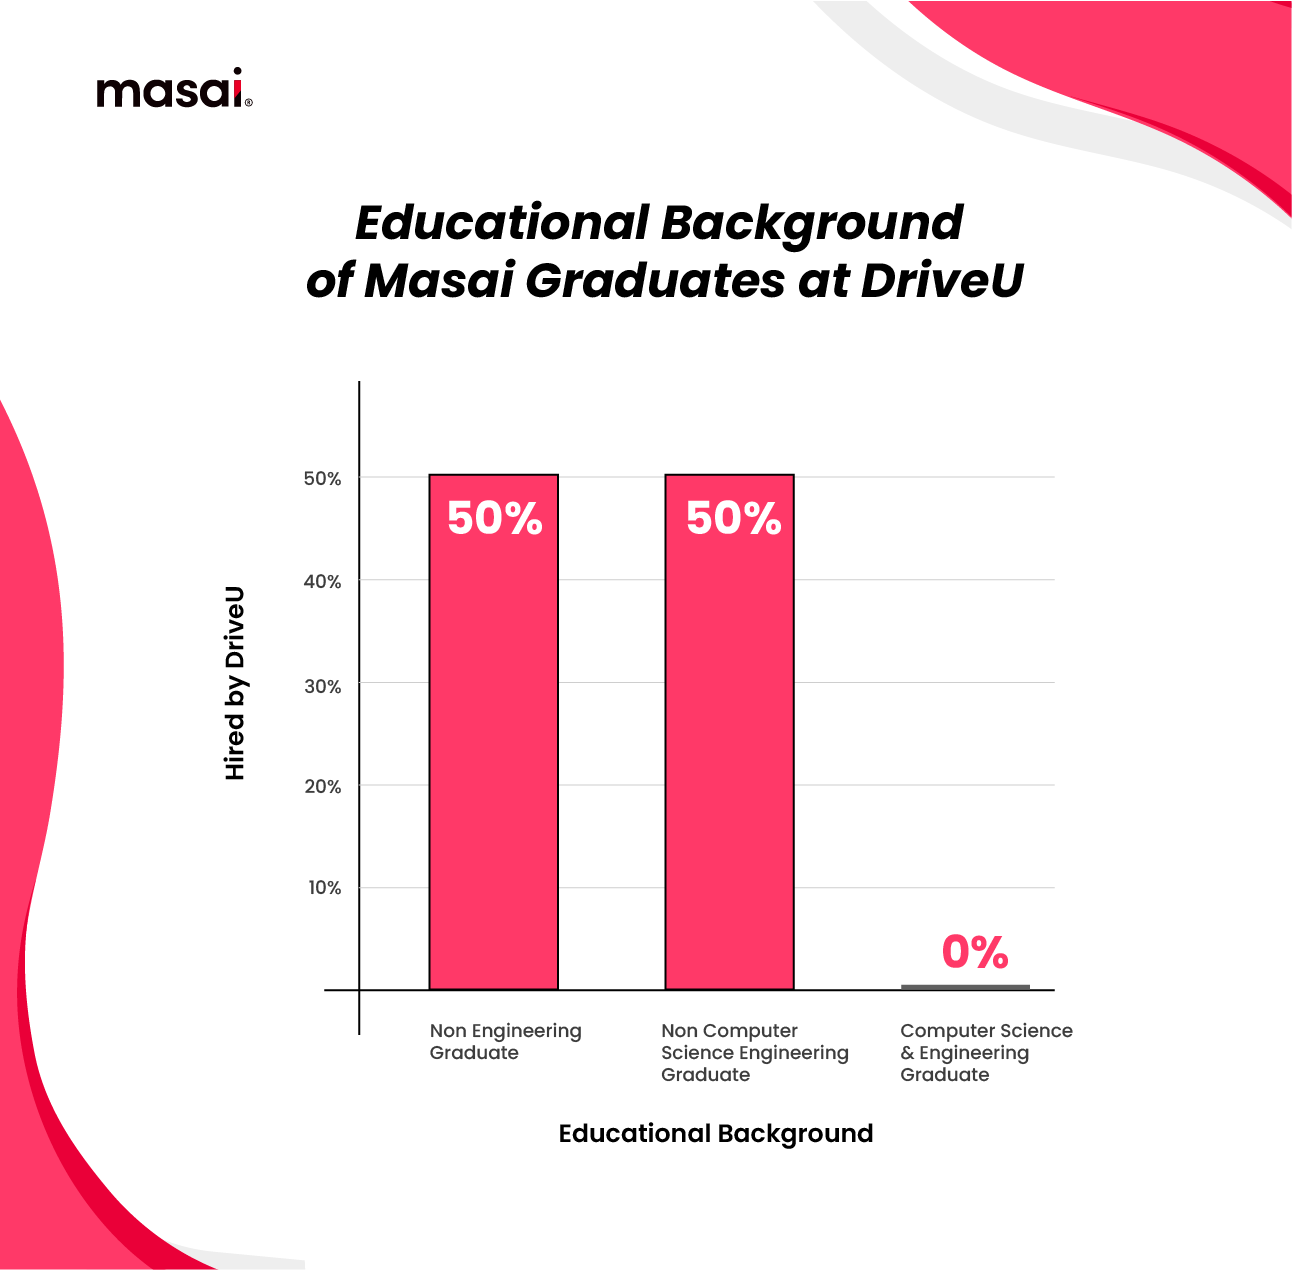 Educational background of Masai graduates at DriveU